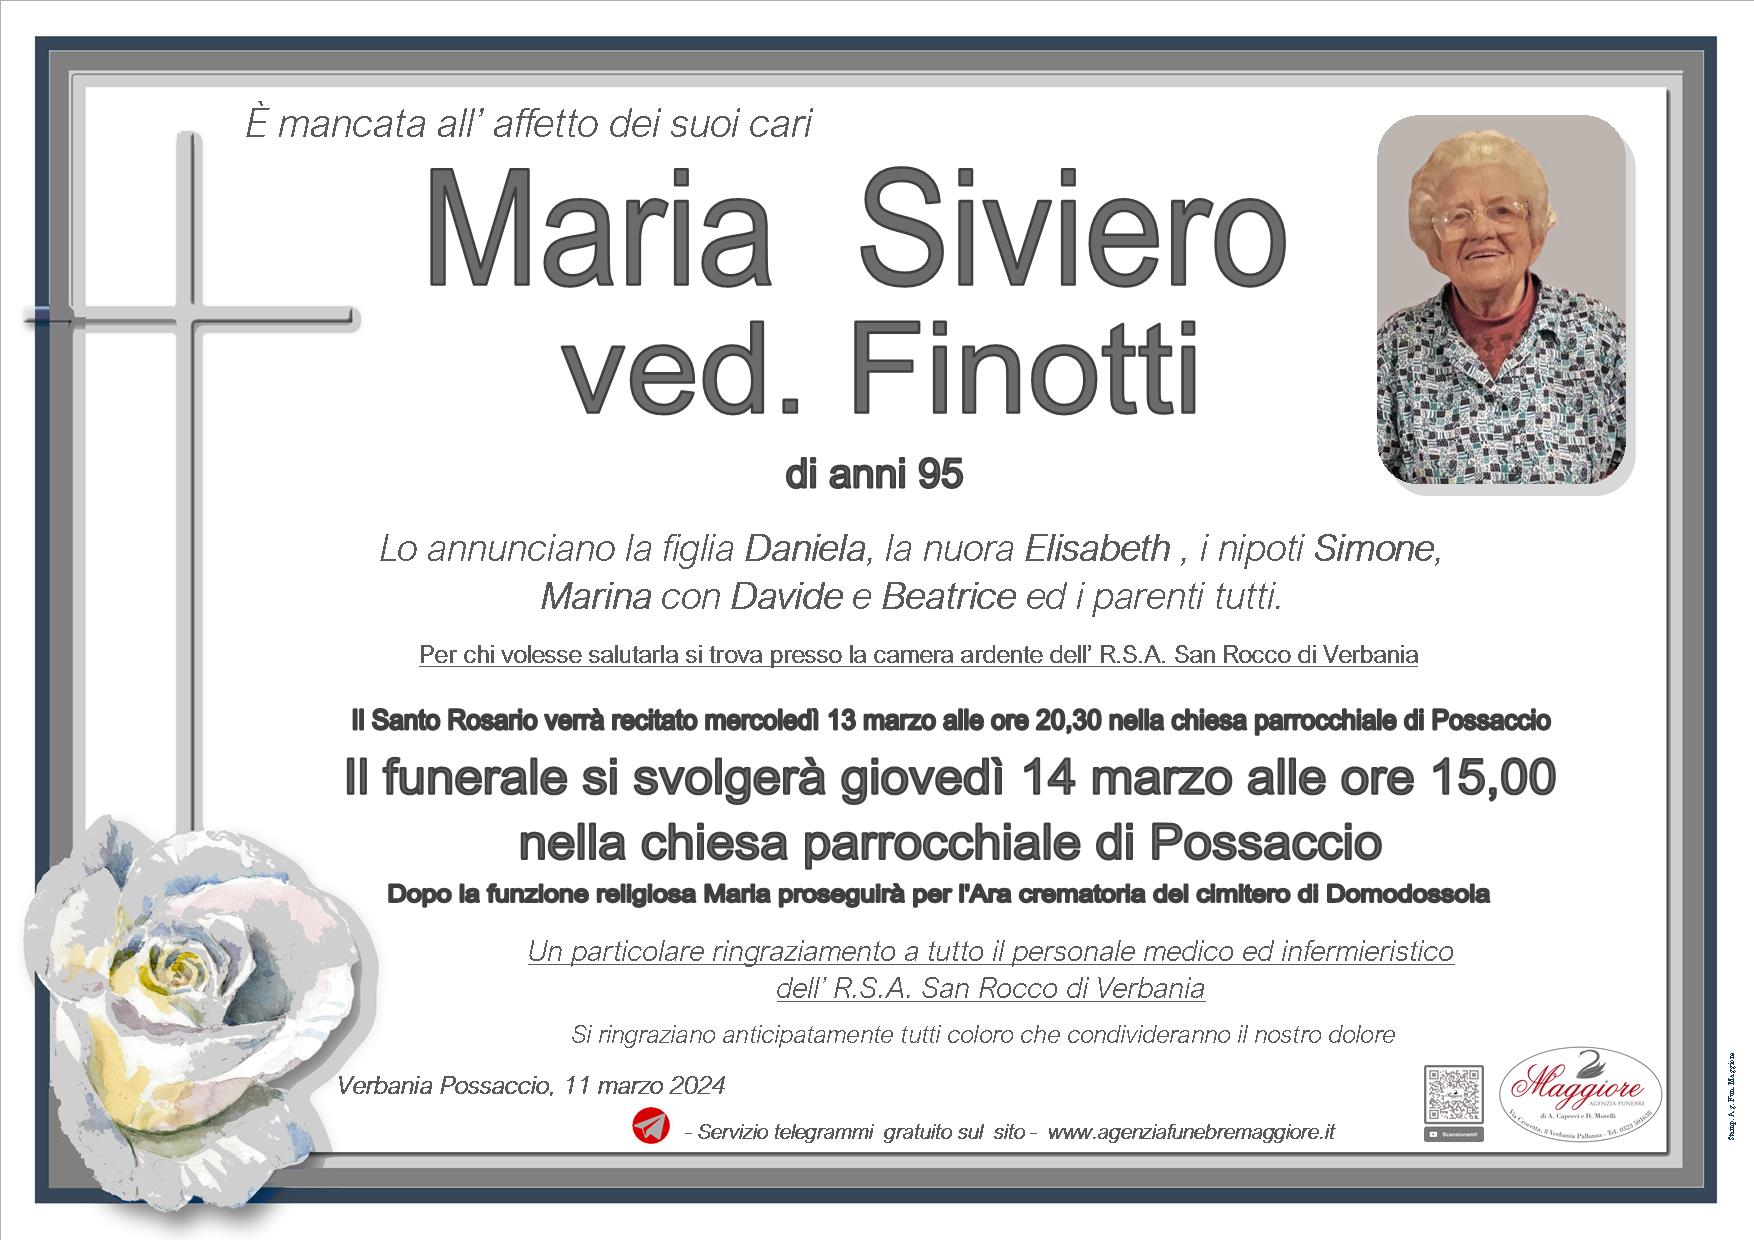 Maria Siviero  ved. Finotti